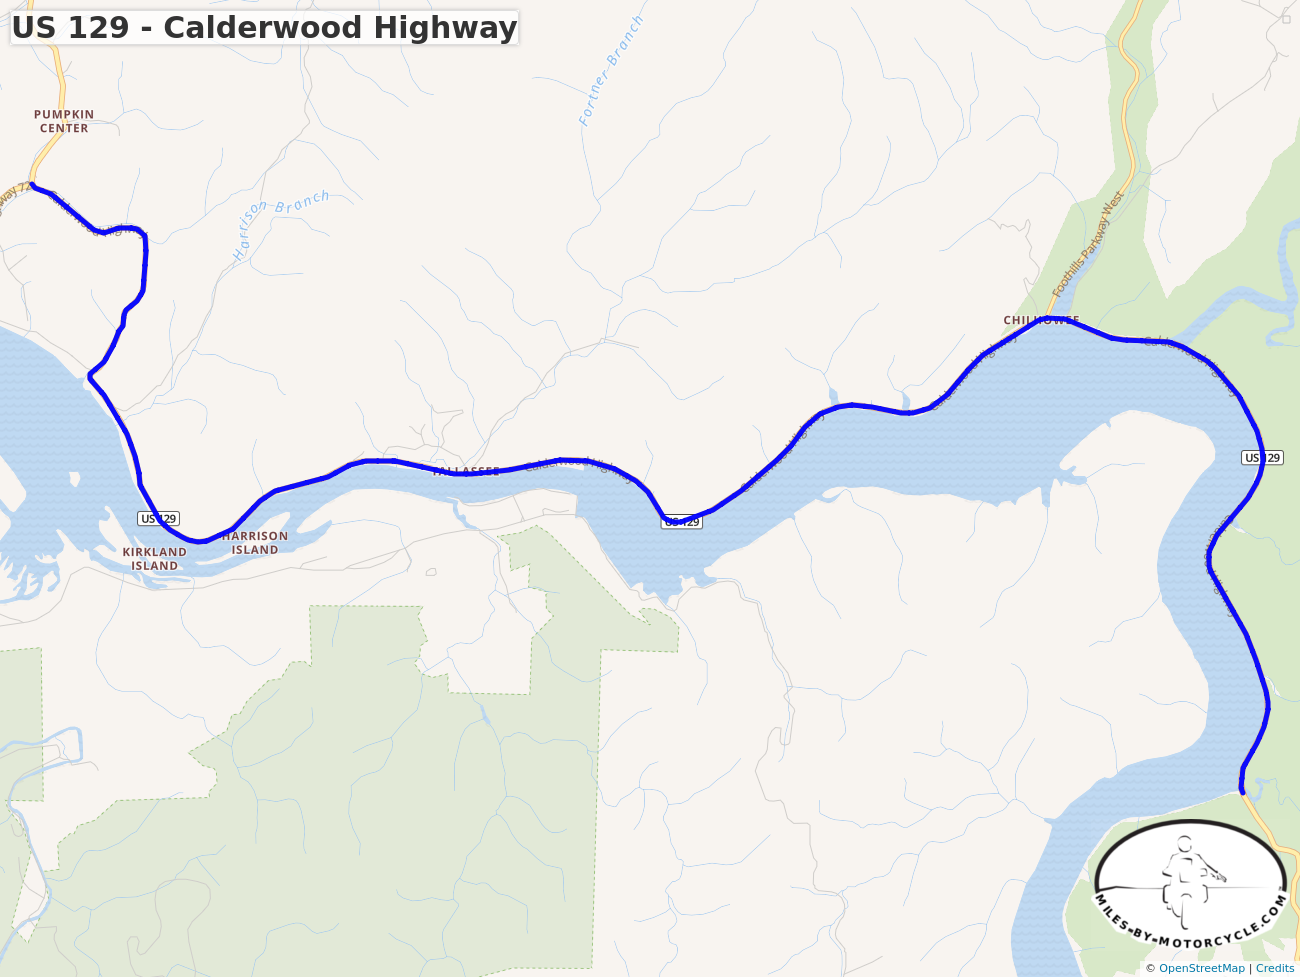 US 129 - Calderwood Highway